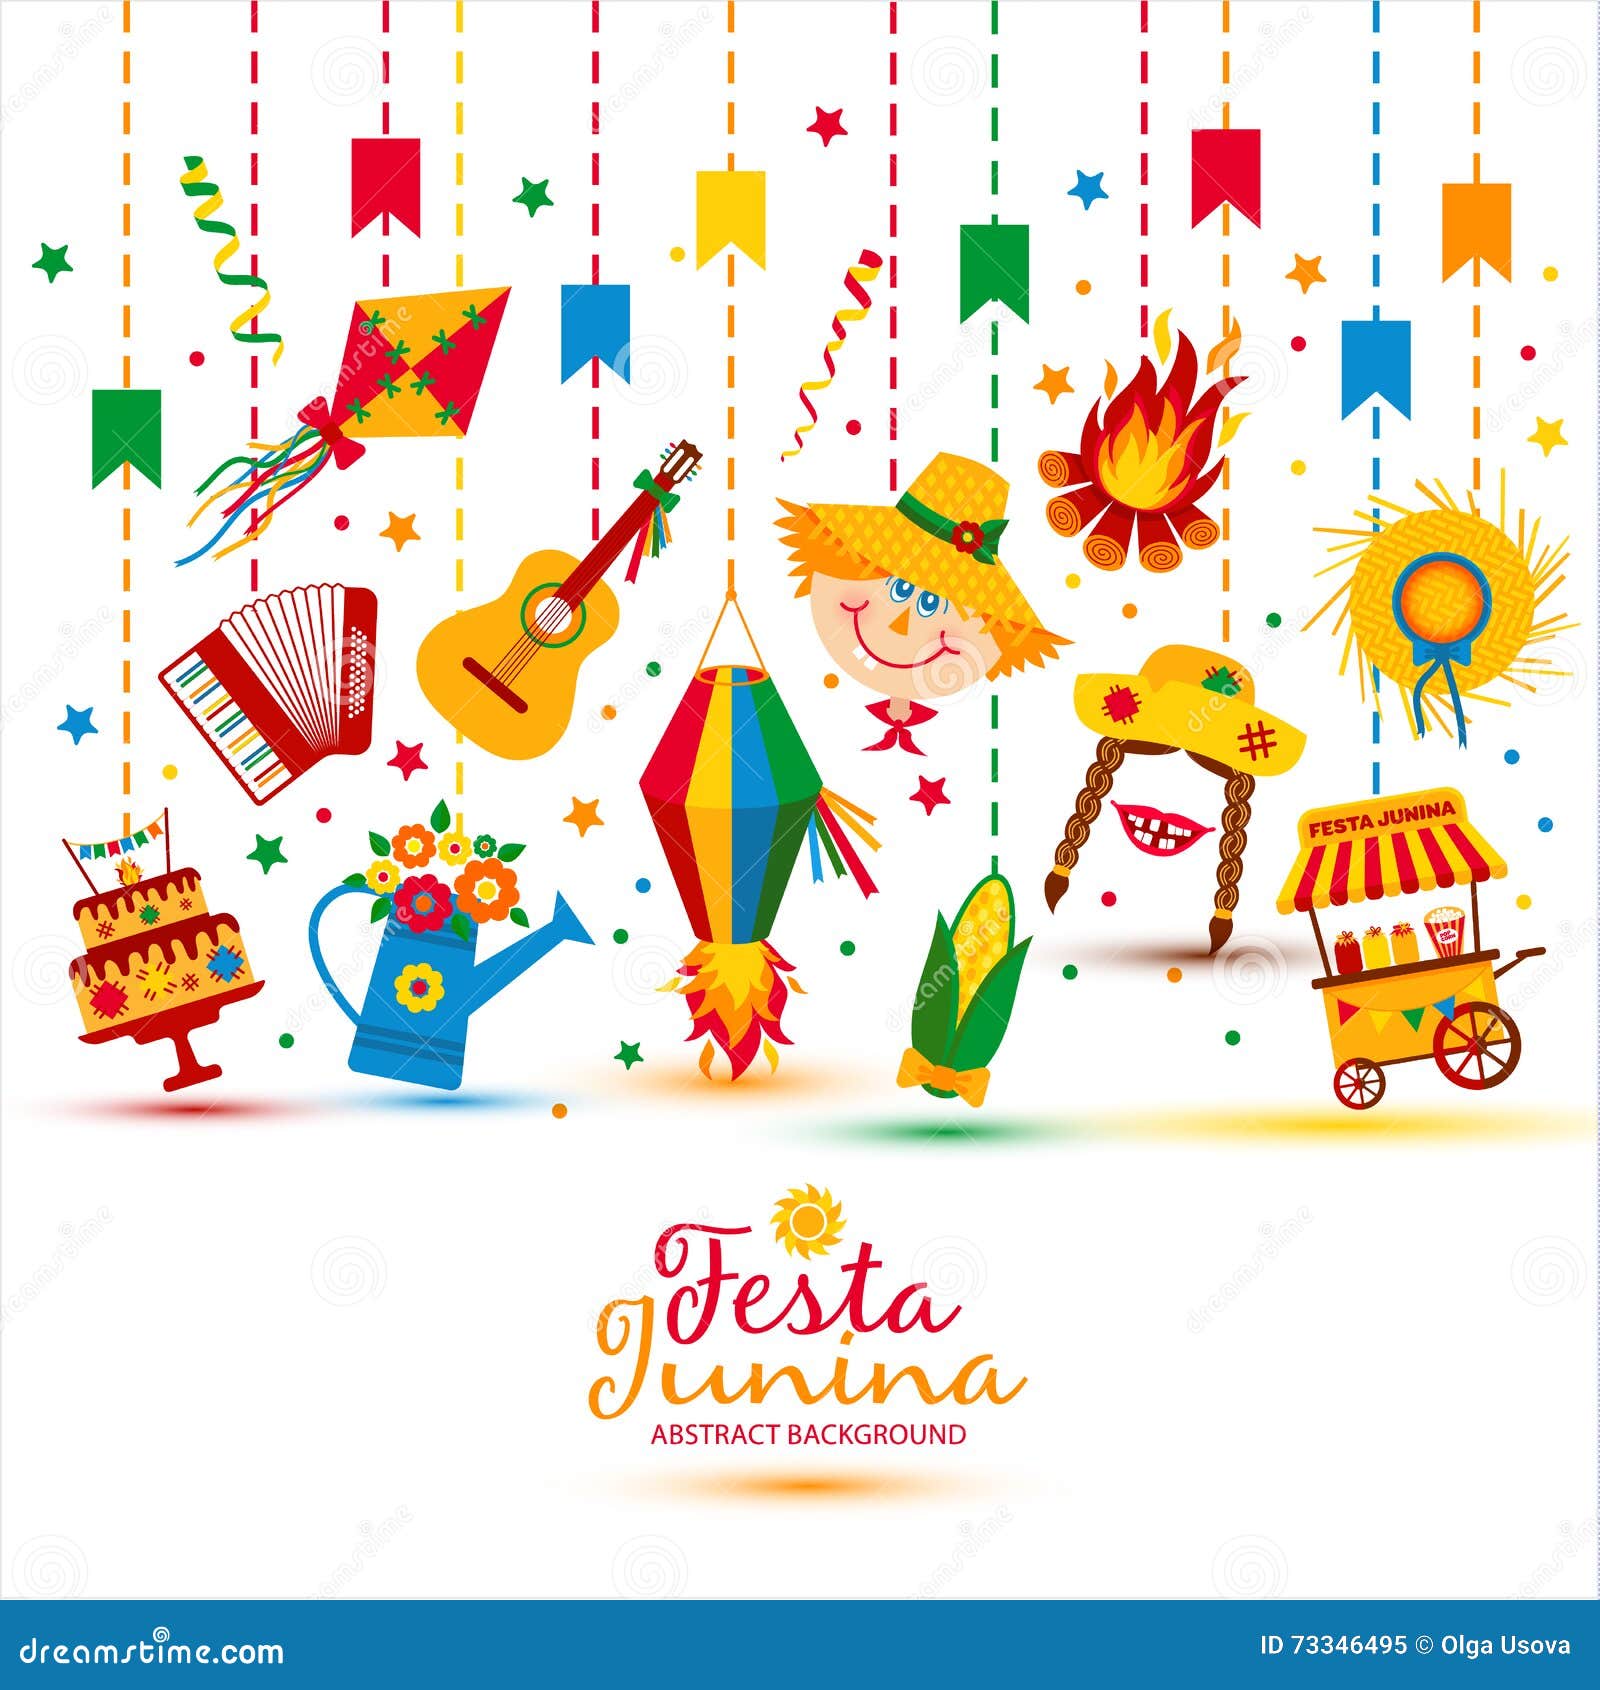 festa junina village festival in latin america. icons set in bright color.